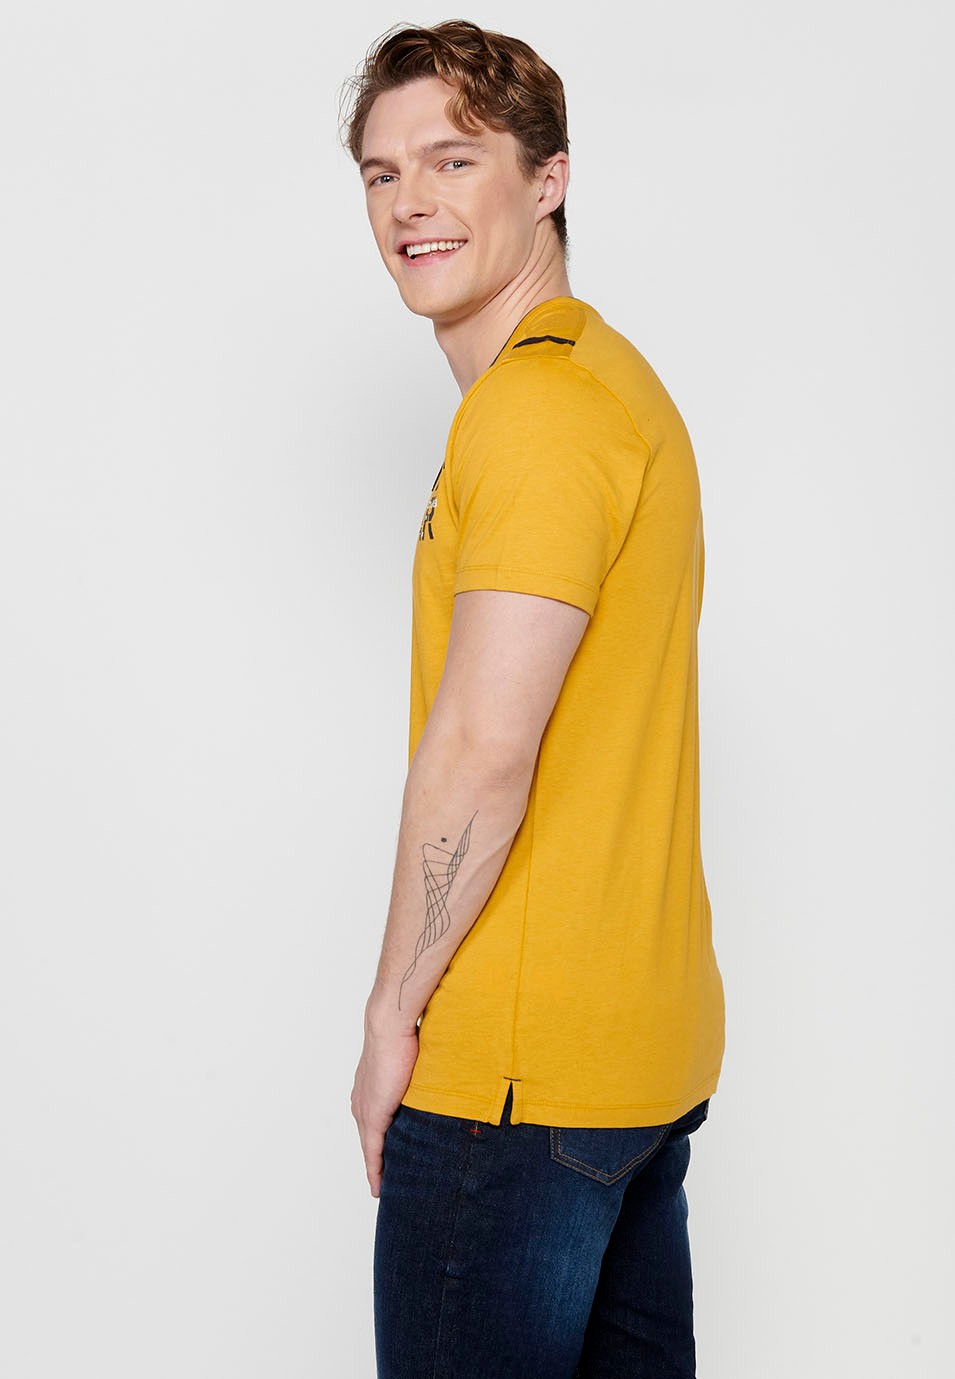 Camiseta de manga corta de Algodón con Cuello redondo con abertura abotonada de Color Amarillo para Hombre 5